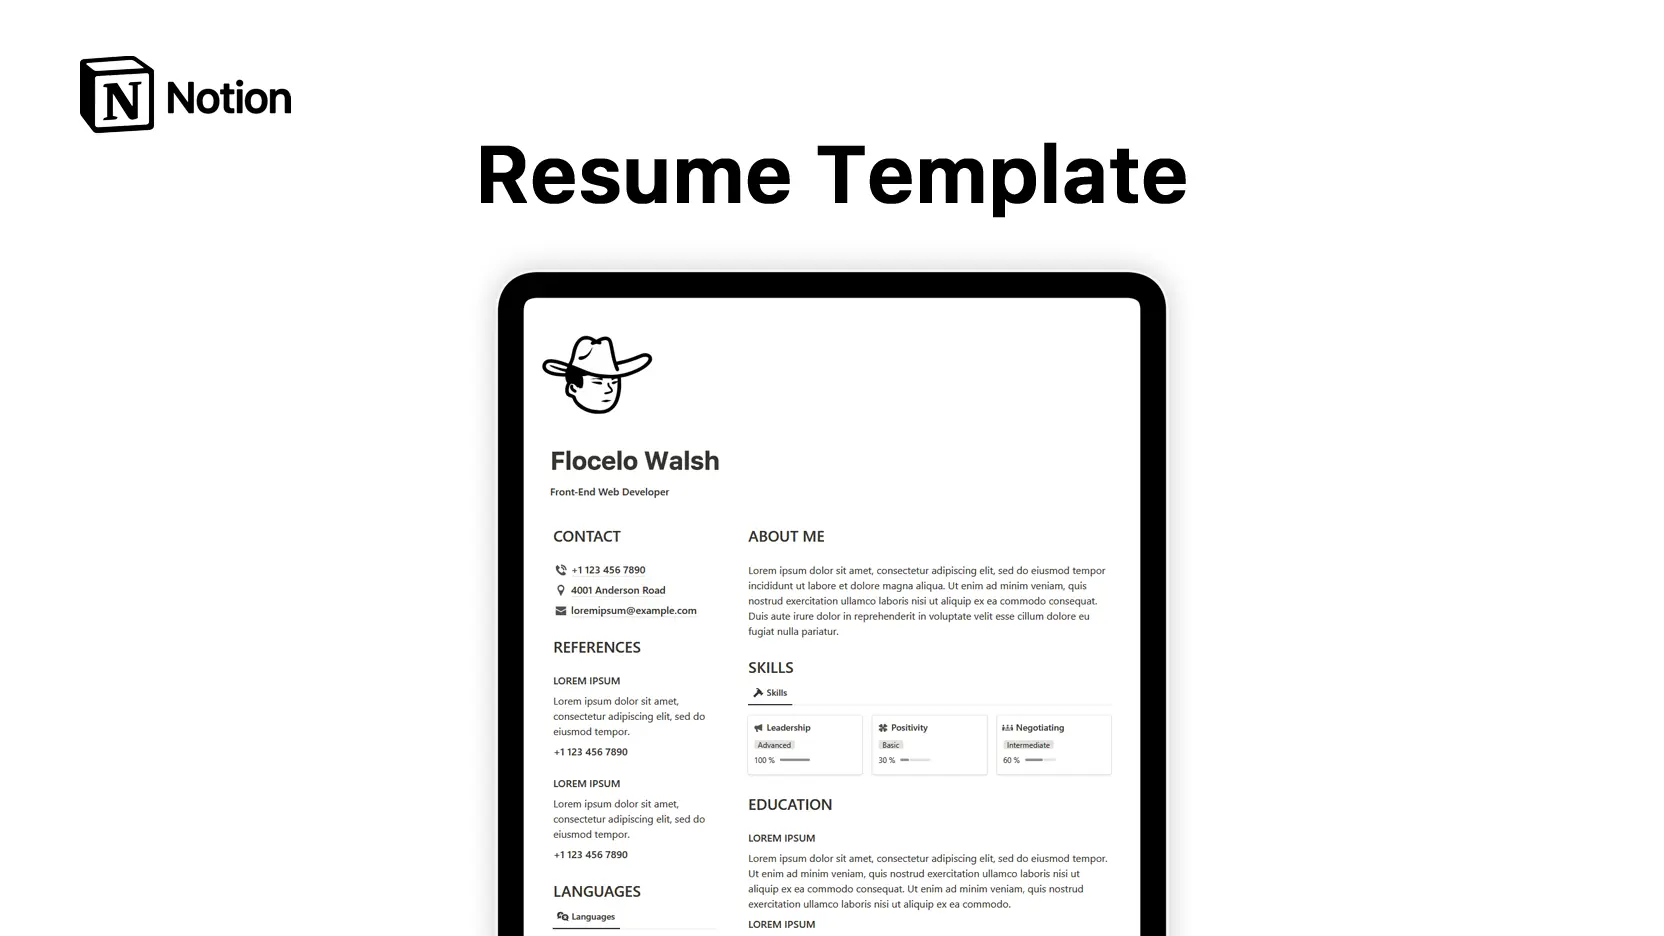 Resume Template image